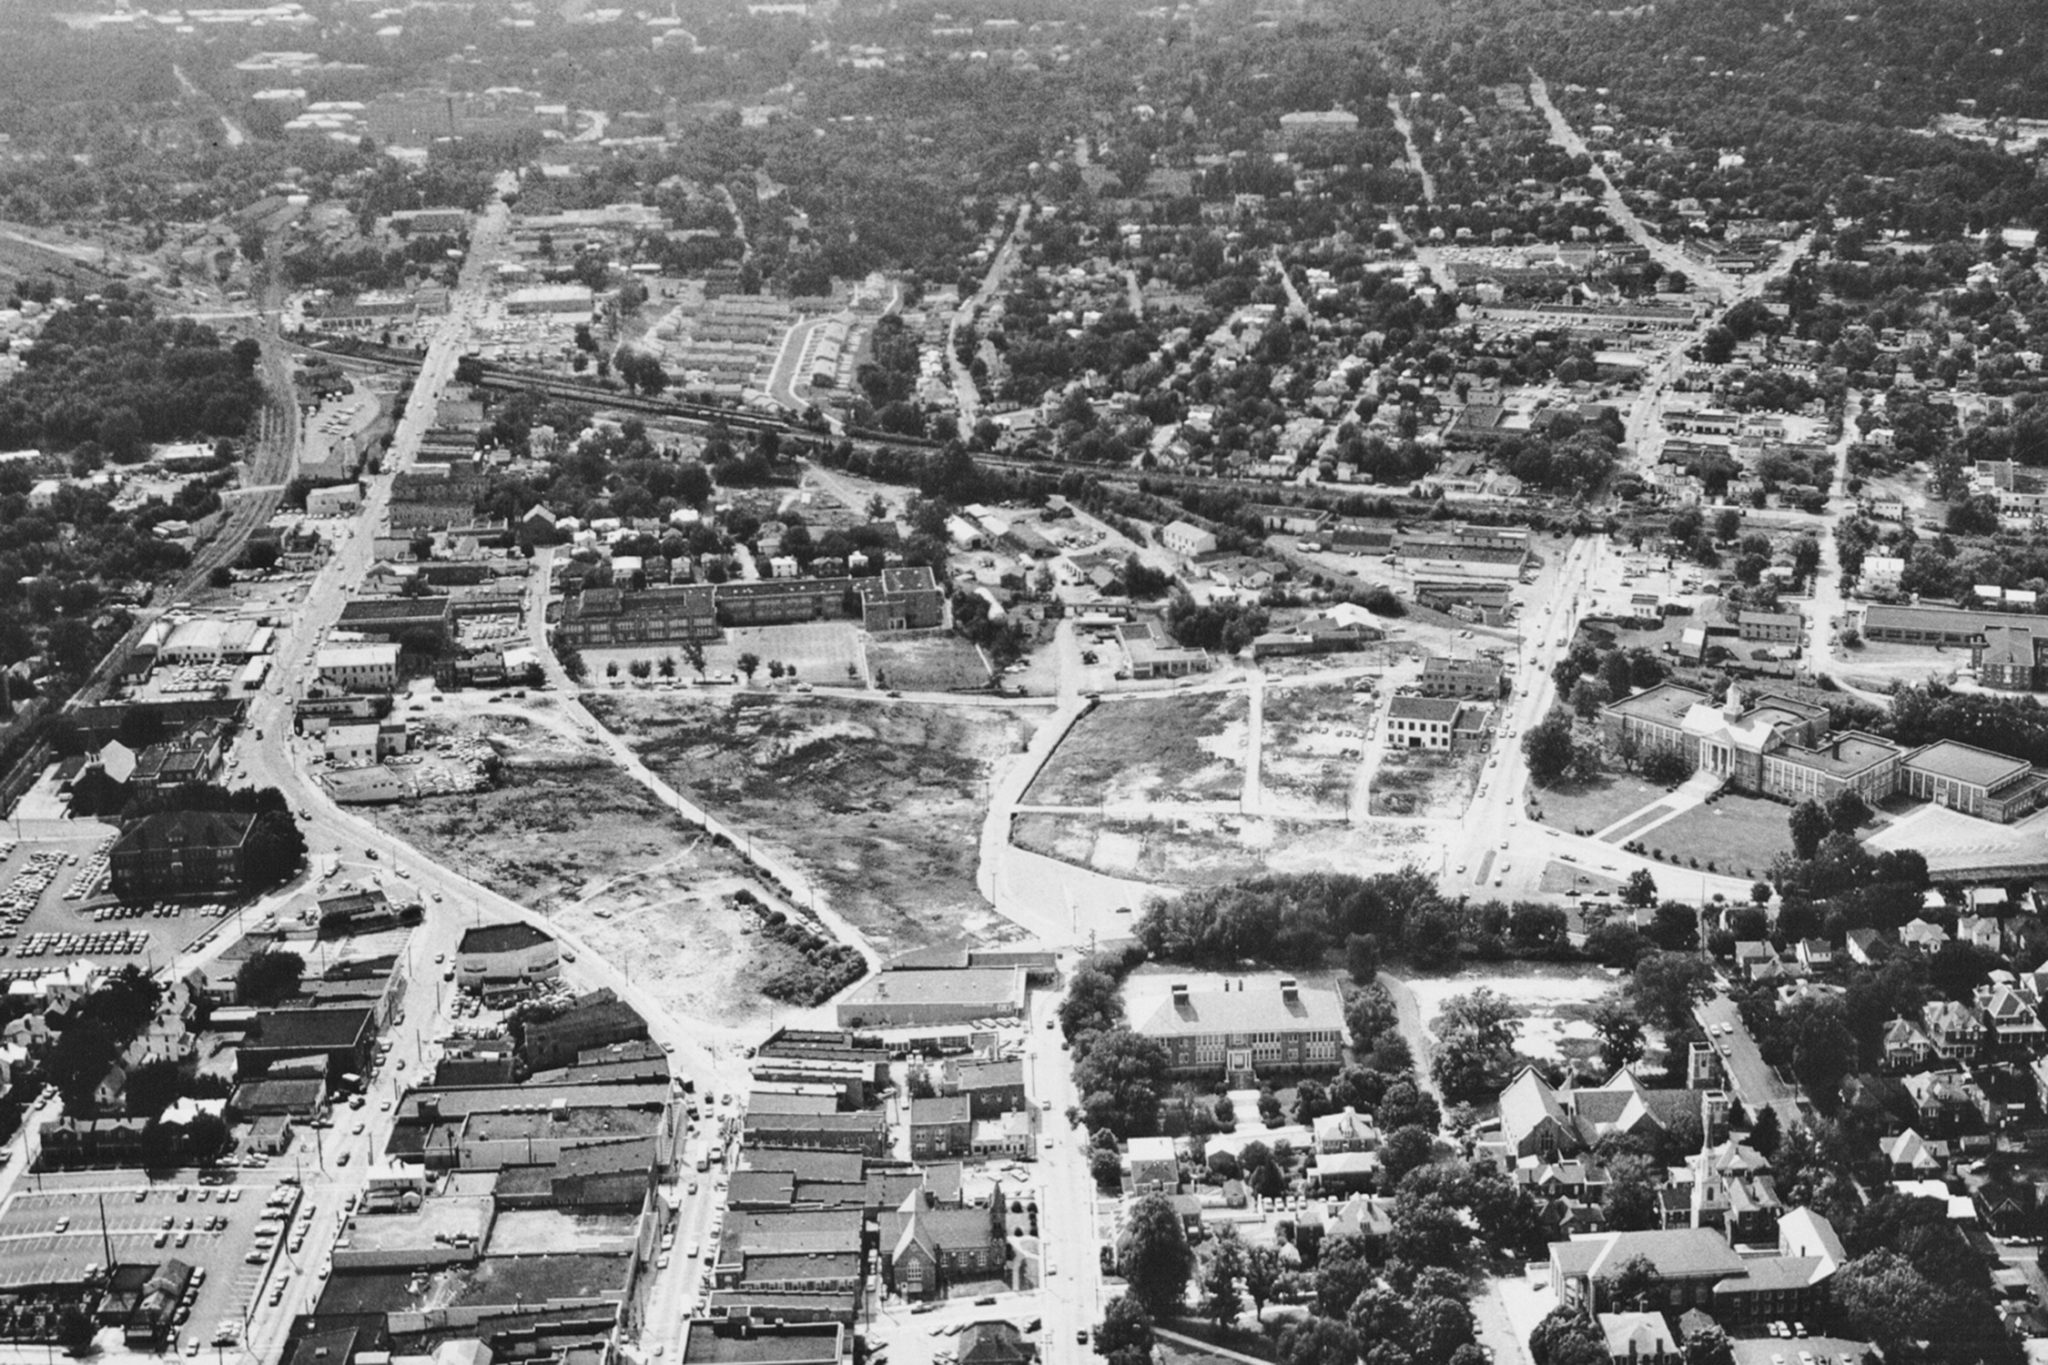 Jefferson School City Center Aerial View